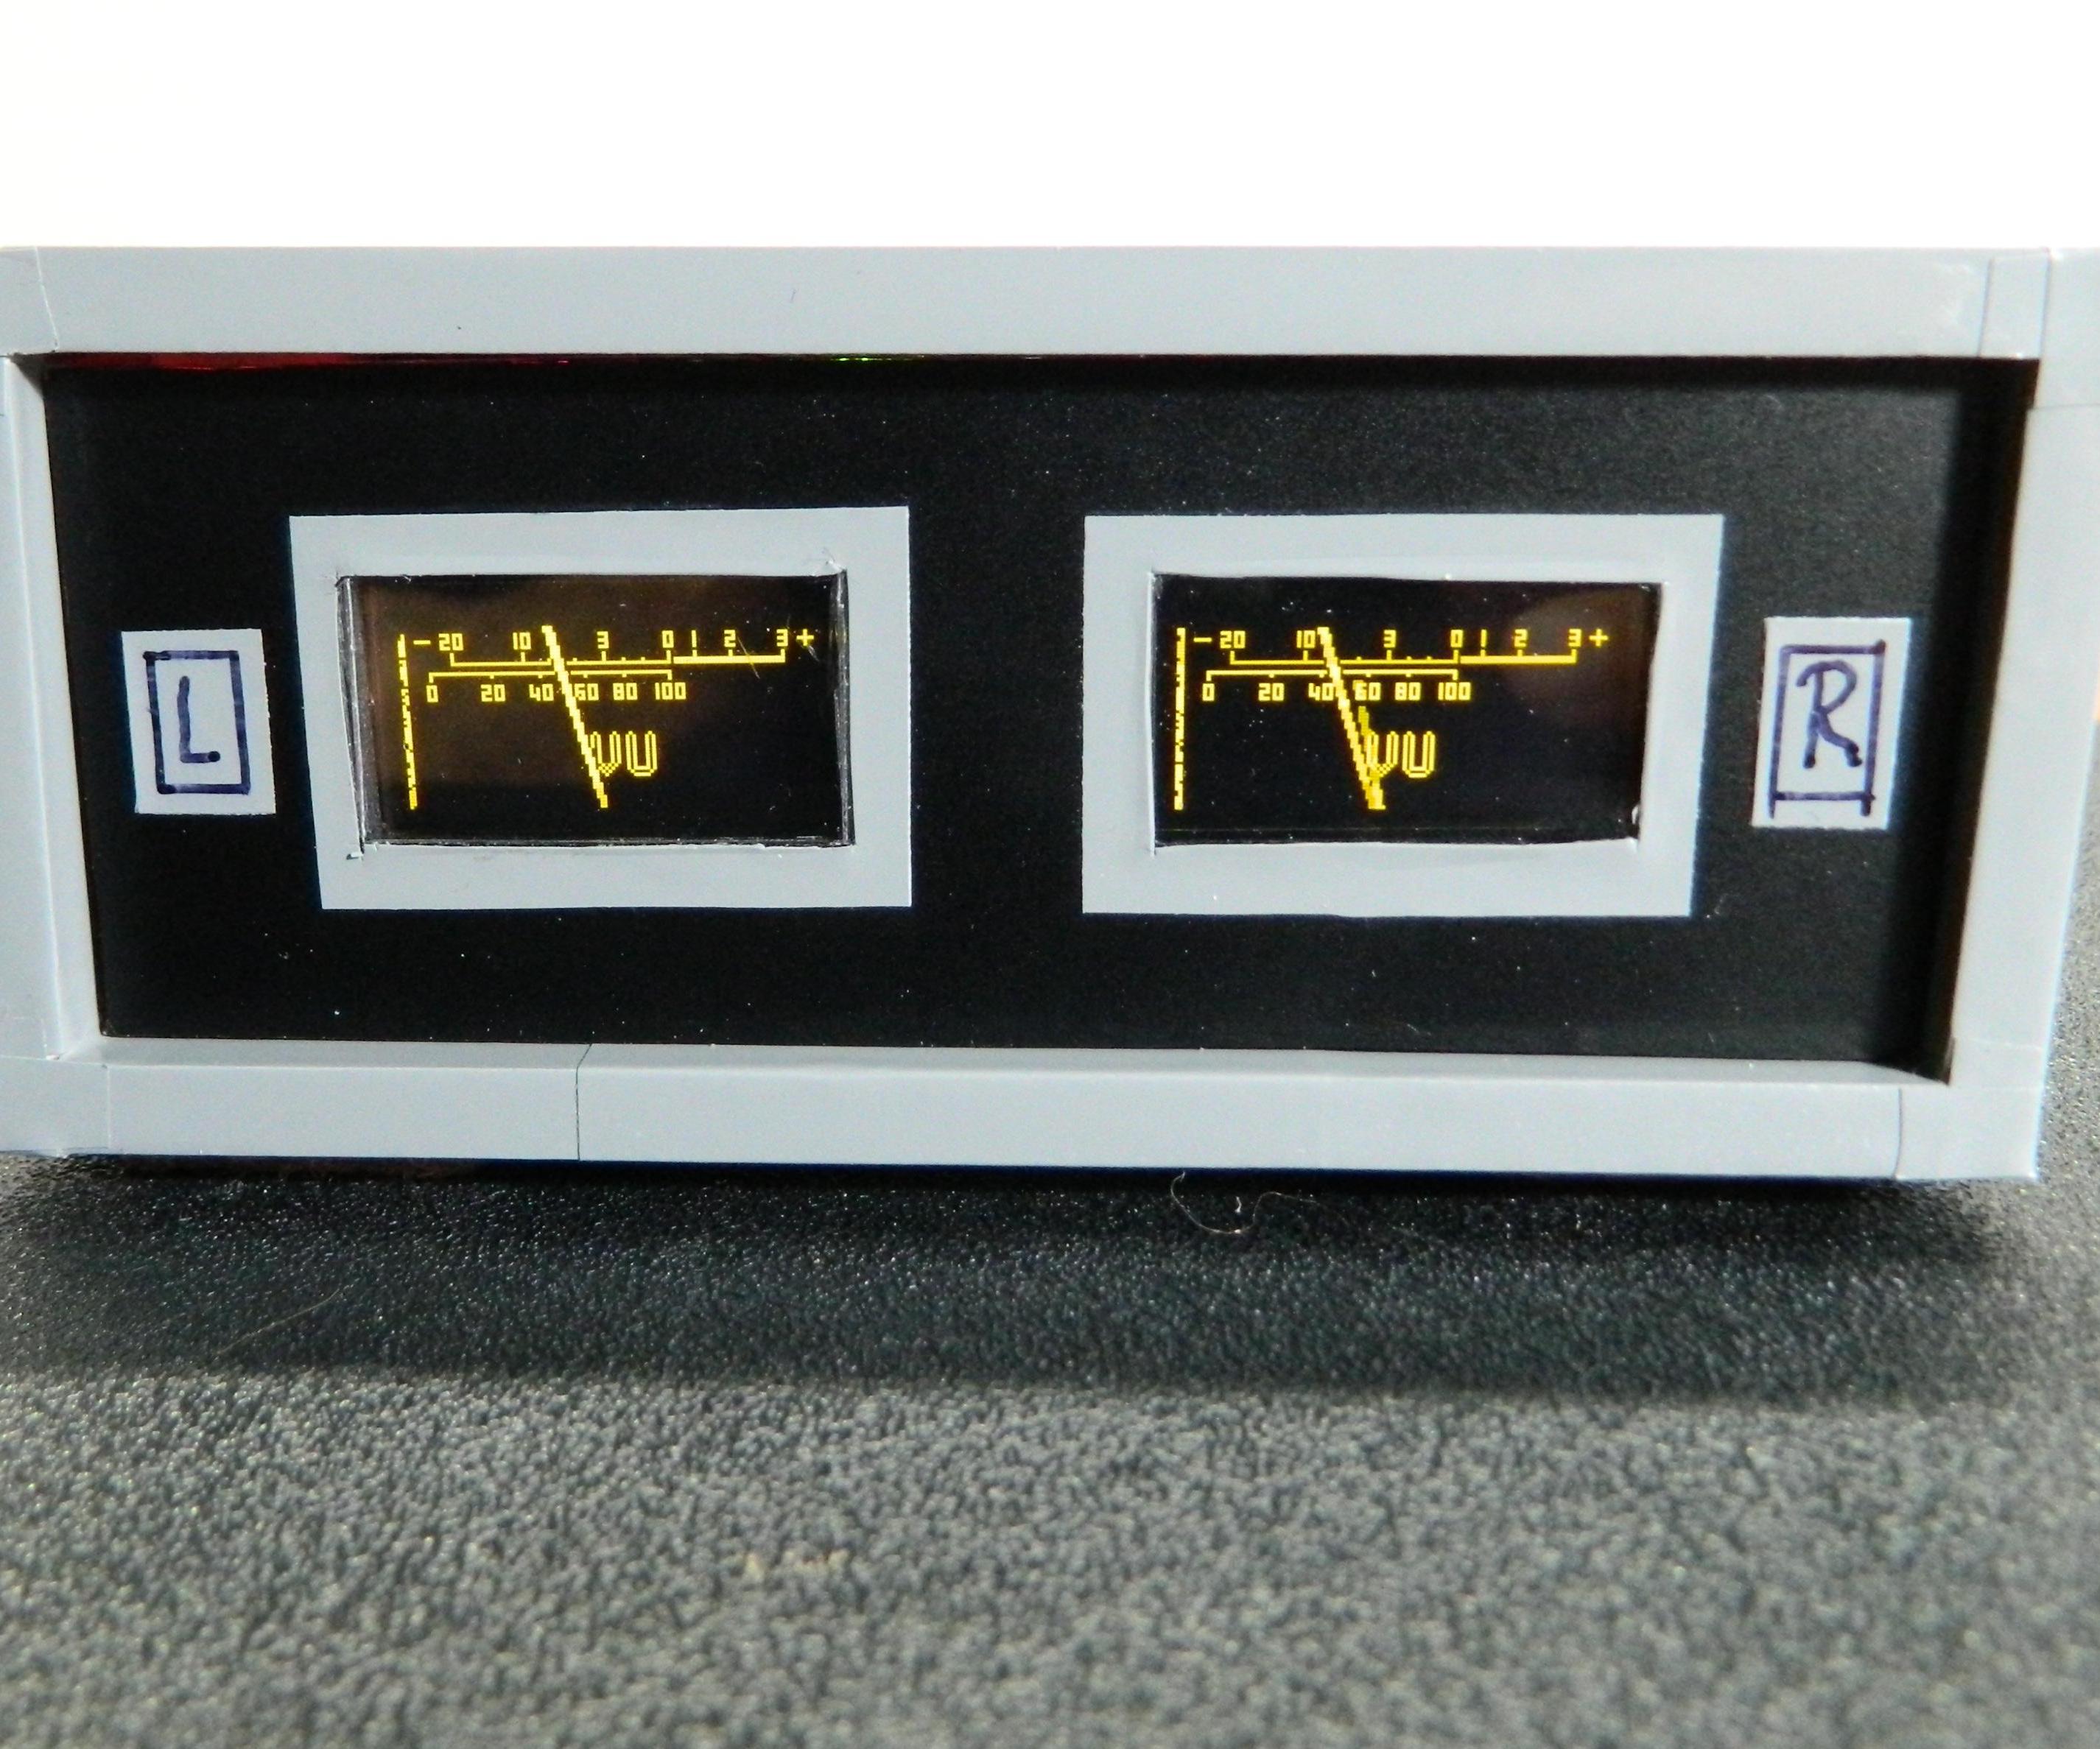 DIY Arduino Analog Style Stereo VU Meter on I2C Oled Displays